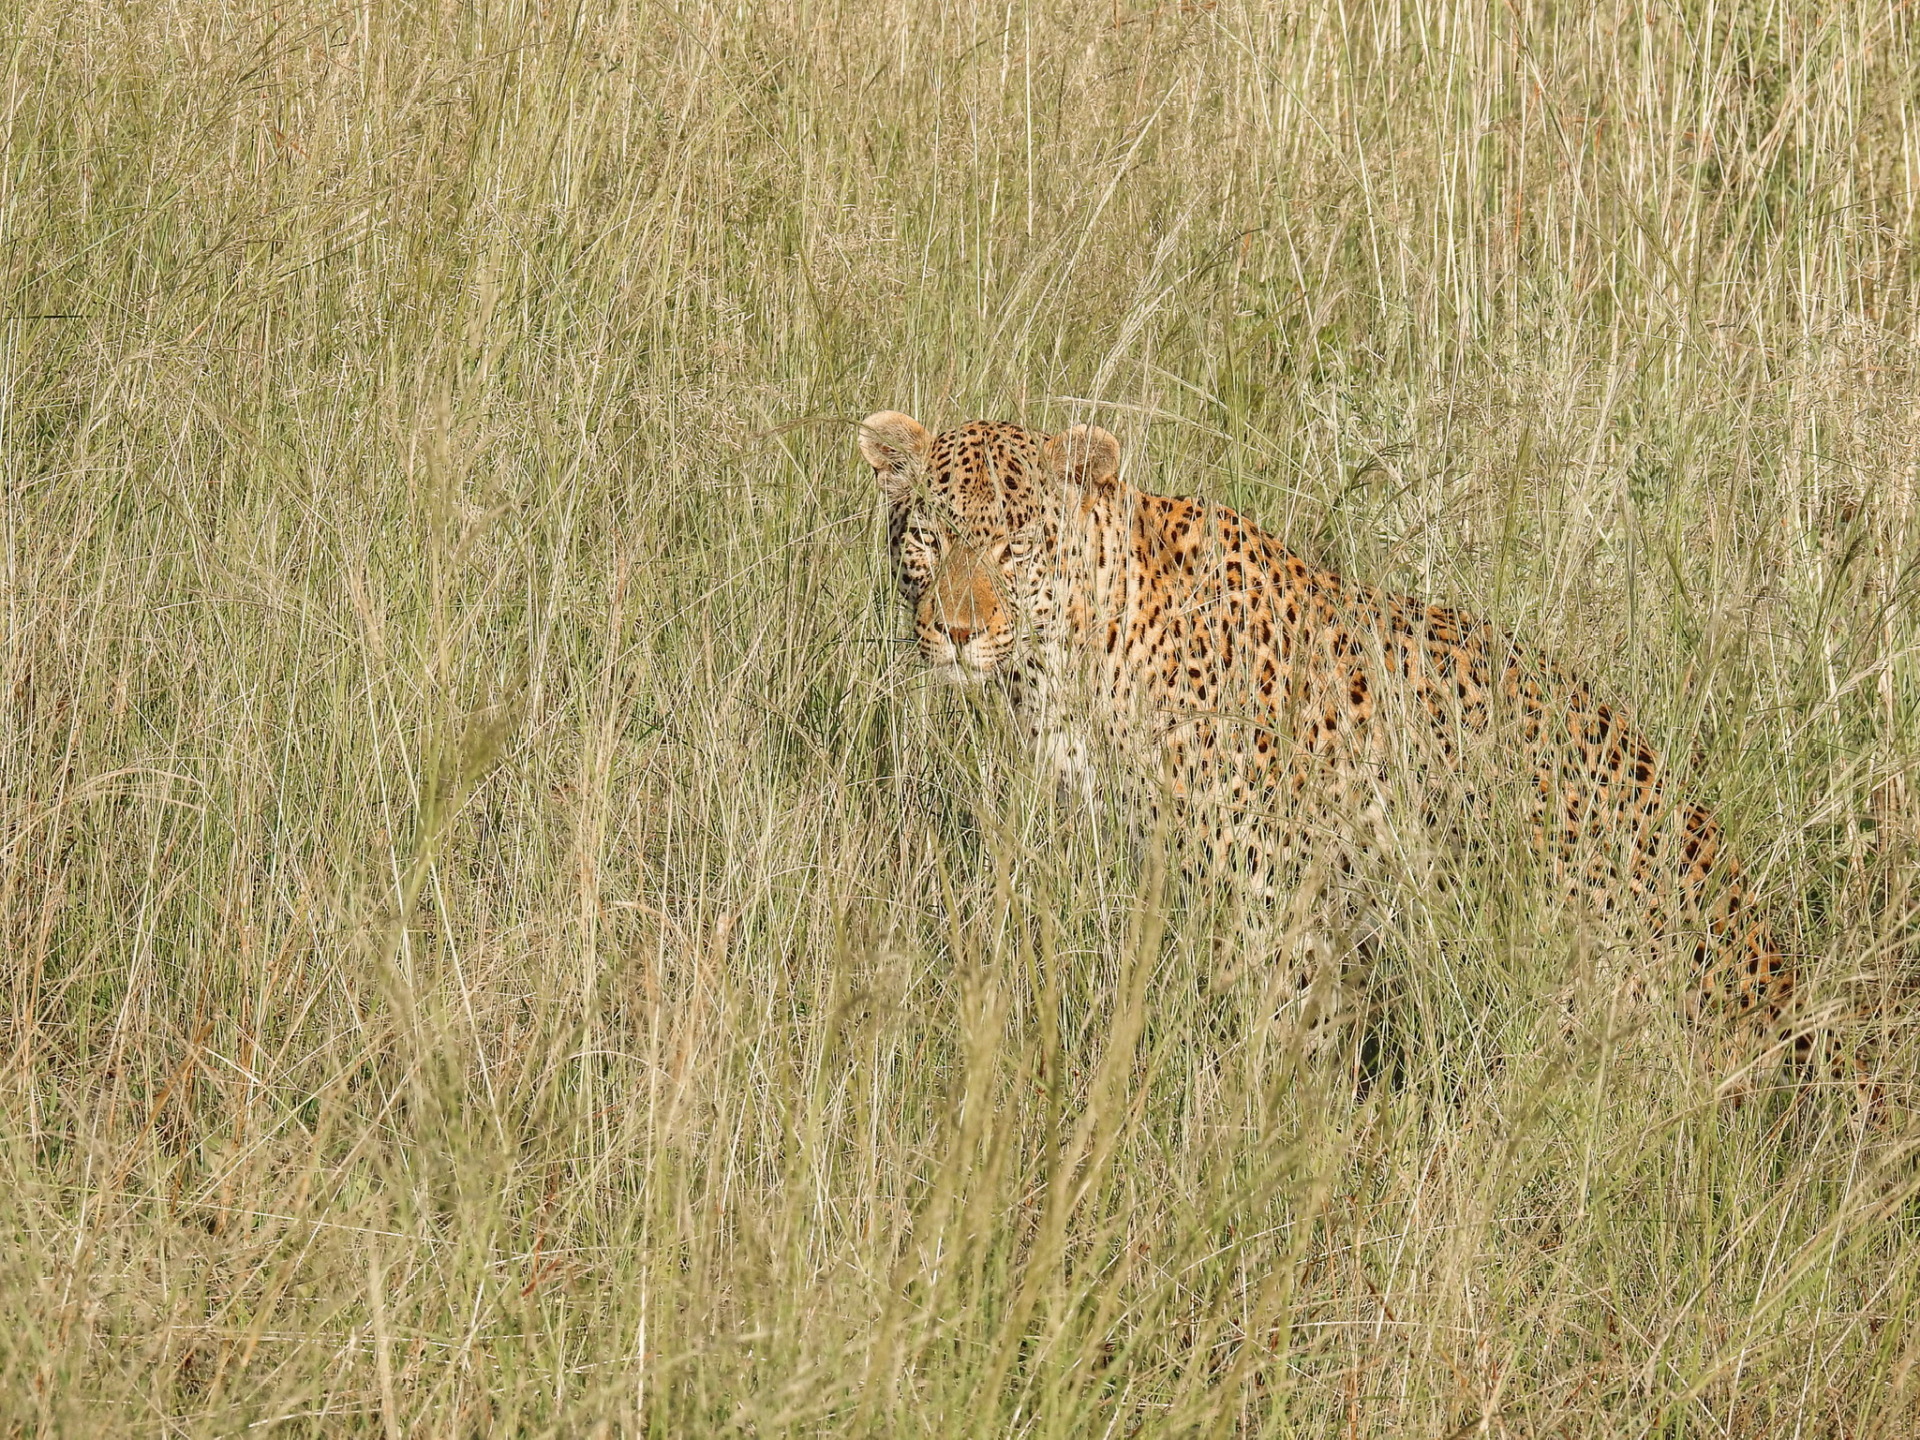 leopard in grass